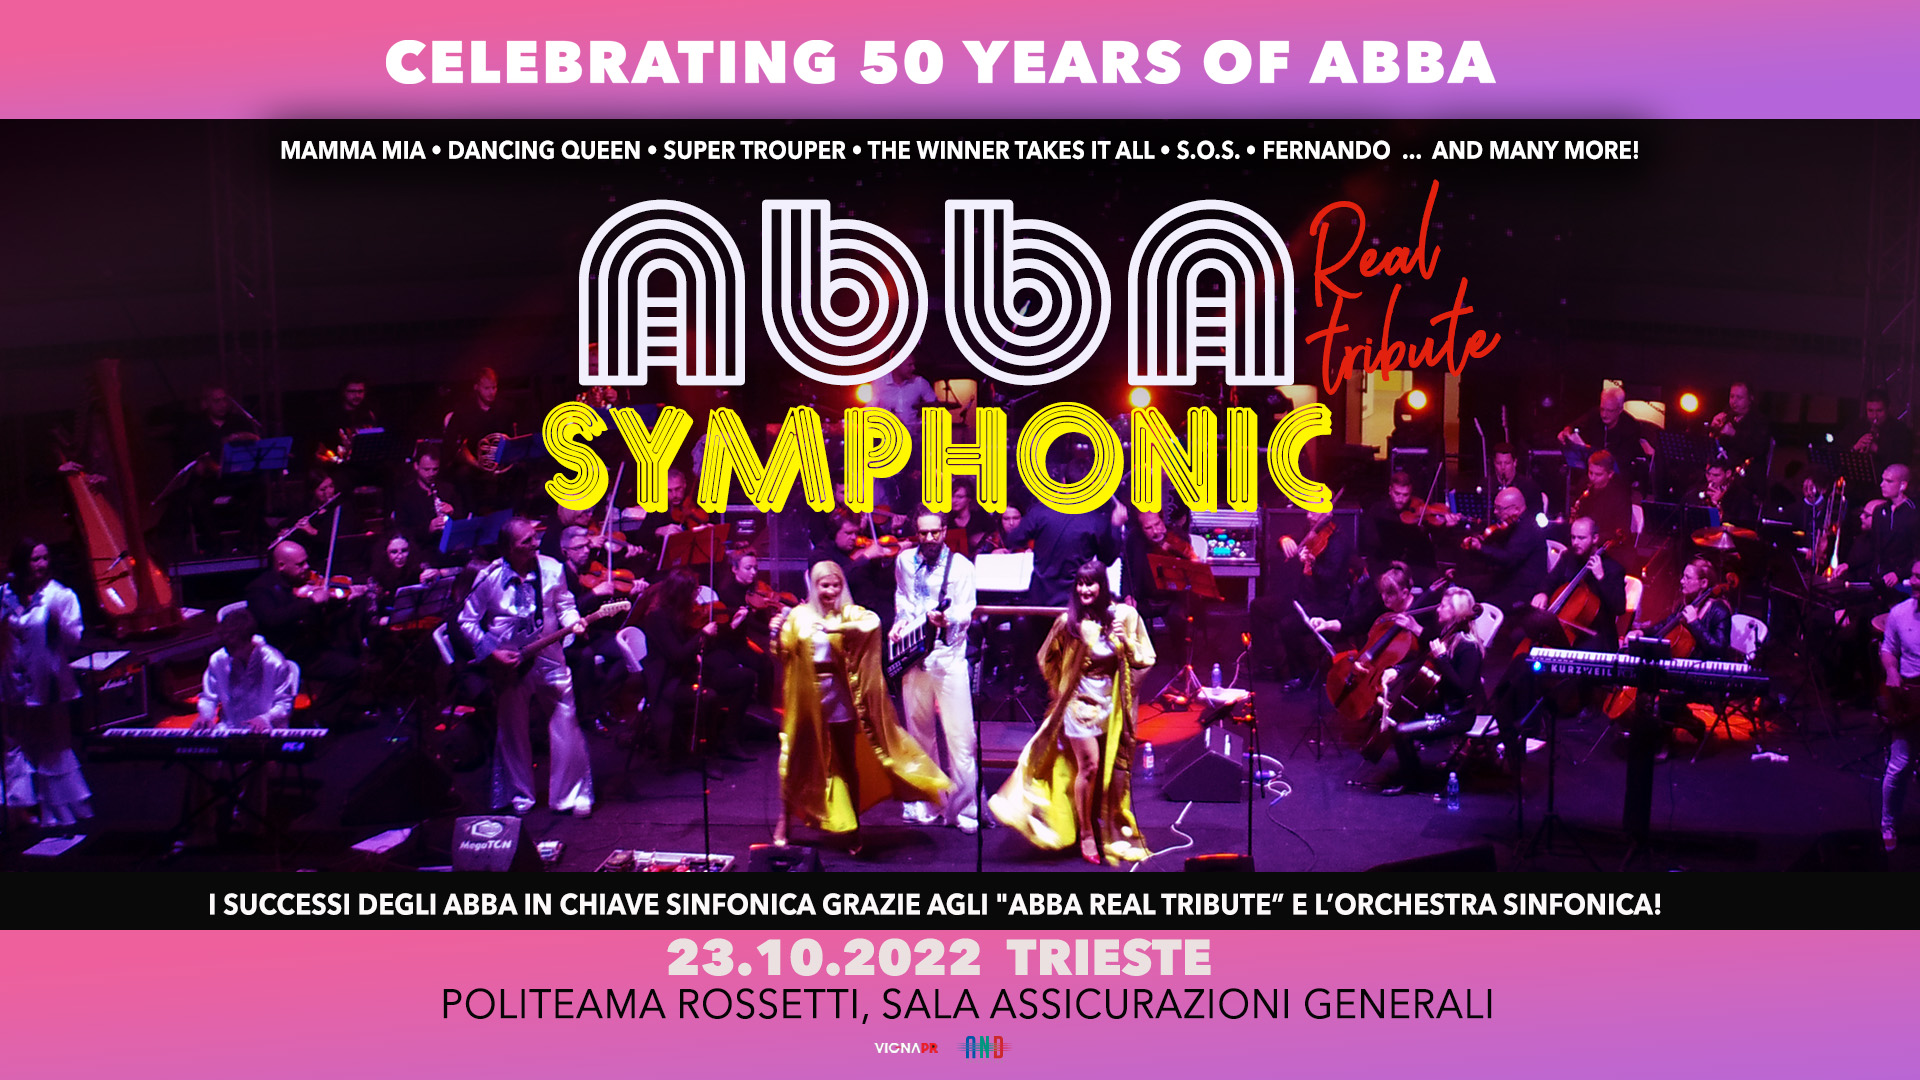 ABBA SYMPHONIC - Celebrating 50 Years of ABBA! ● TRIESTE, Politeama Rossetti